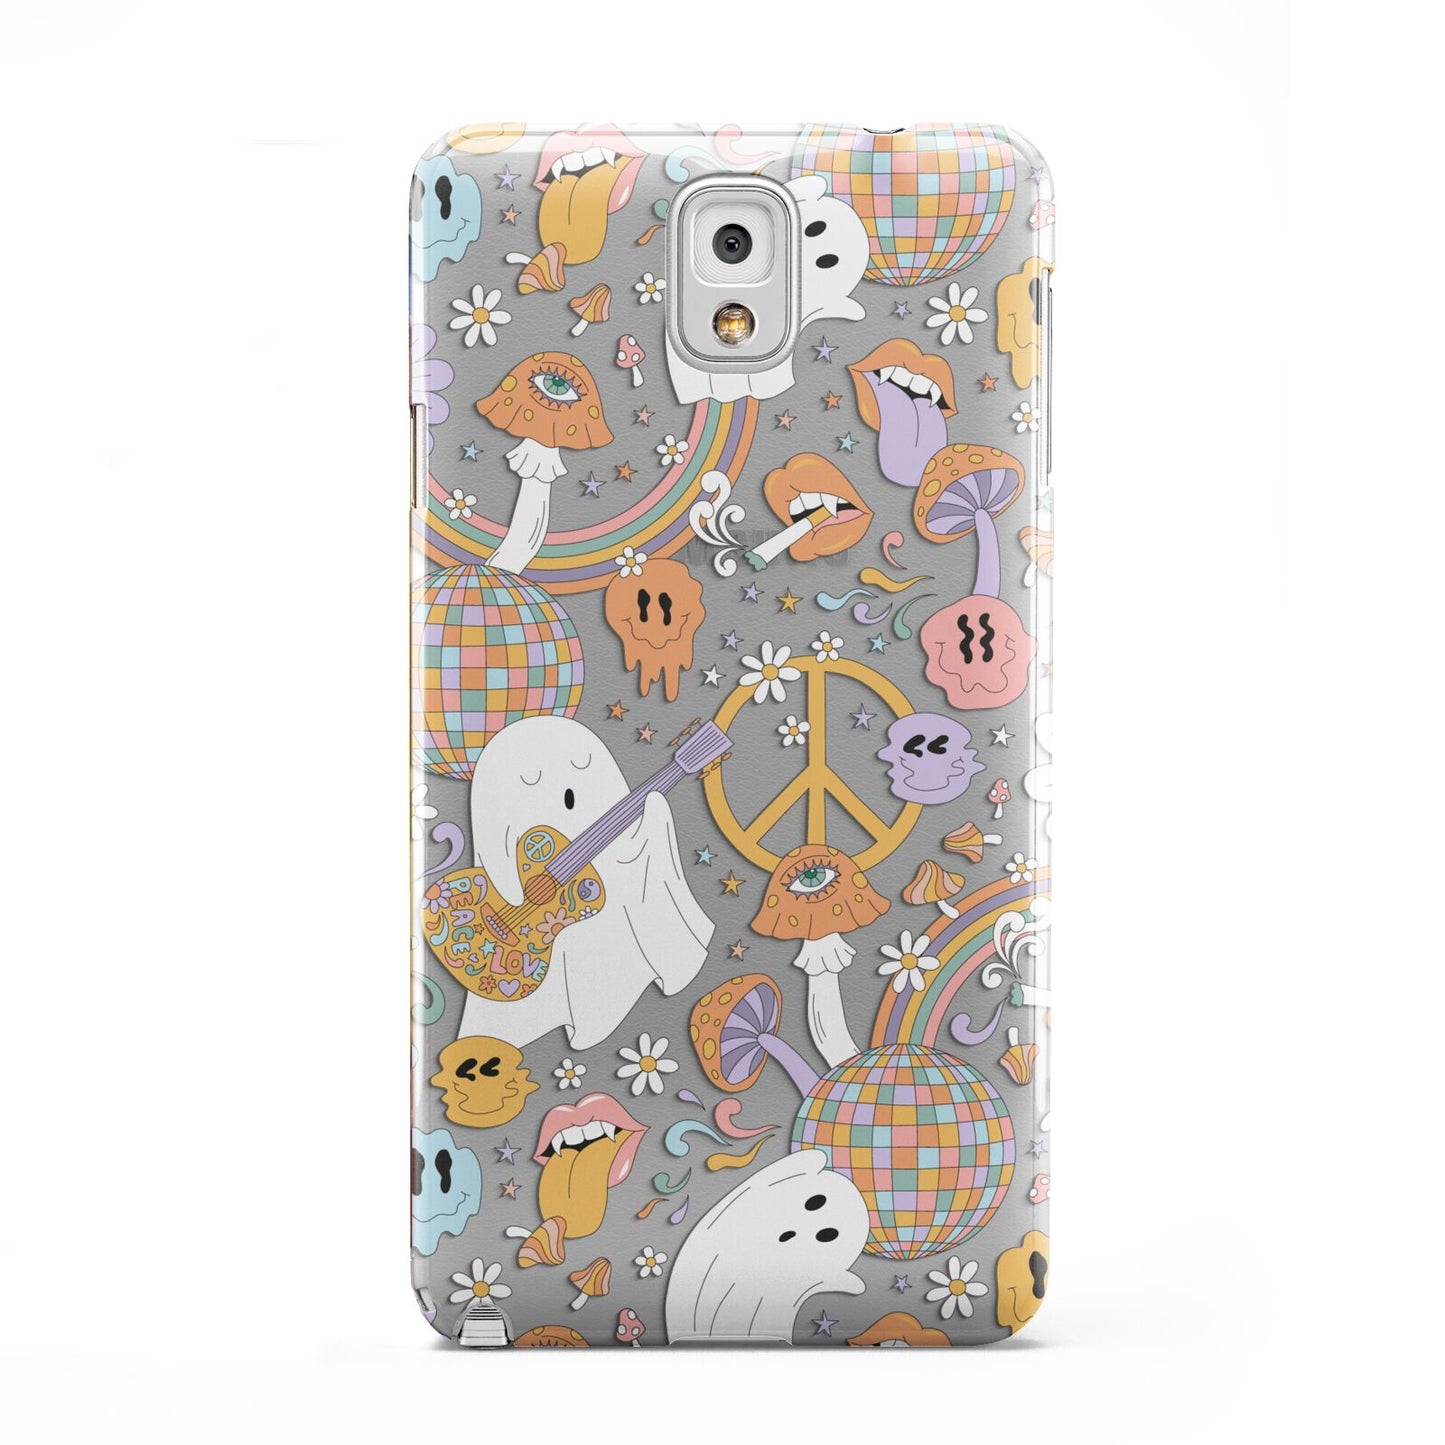 Disco Ghosts Samsung Galaxy Note 3 Case